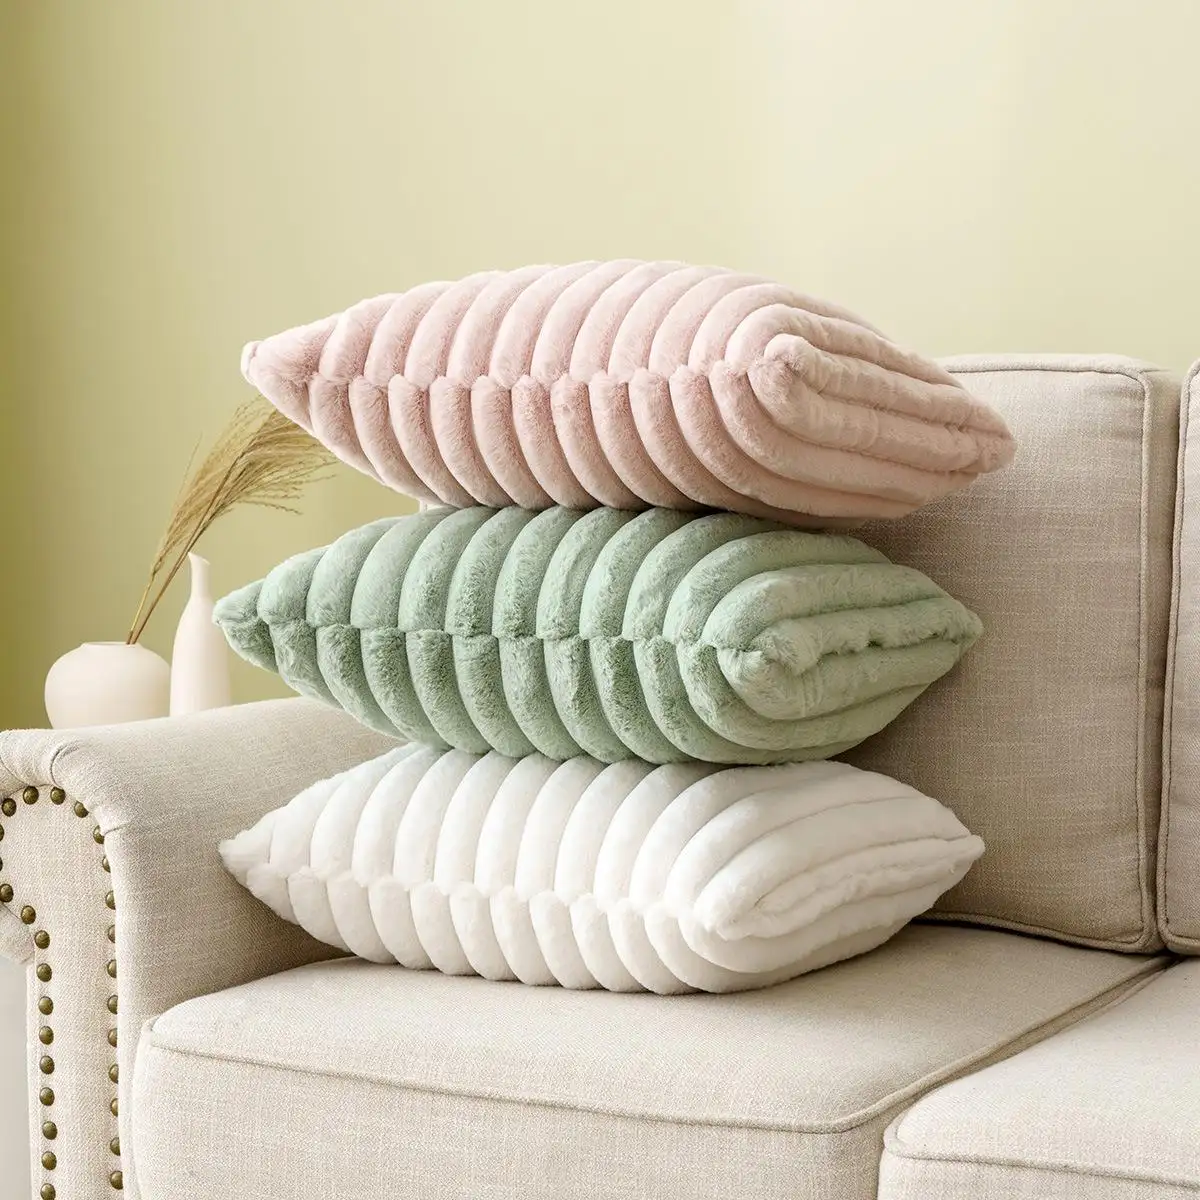 Wholesale Corduroy Stripe Cushion Cover Plush Pillowcases 18x18 Inch Plain Decorative Throw Pillow Covers